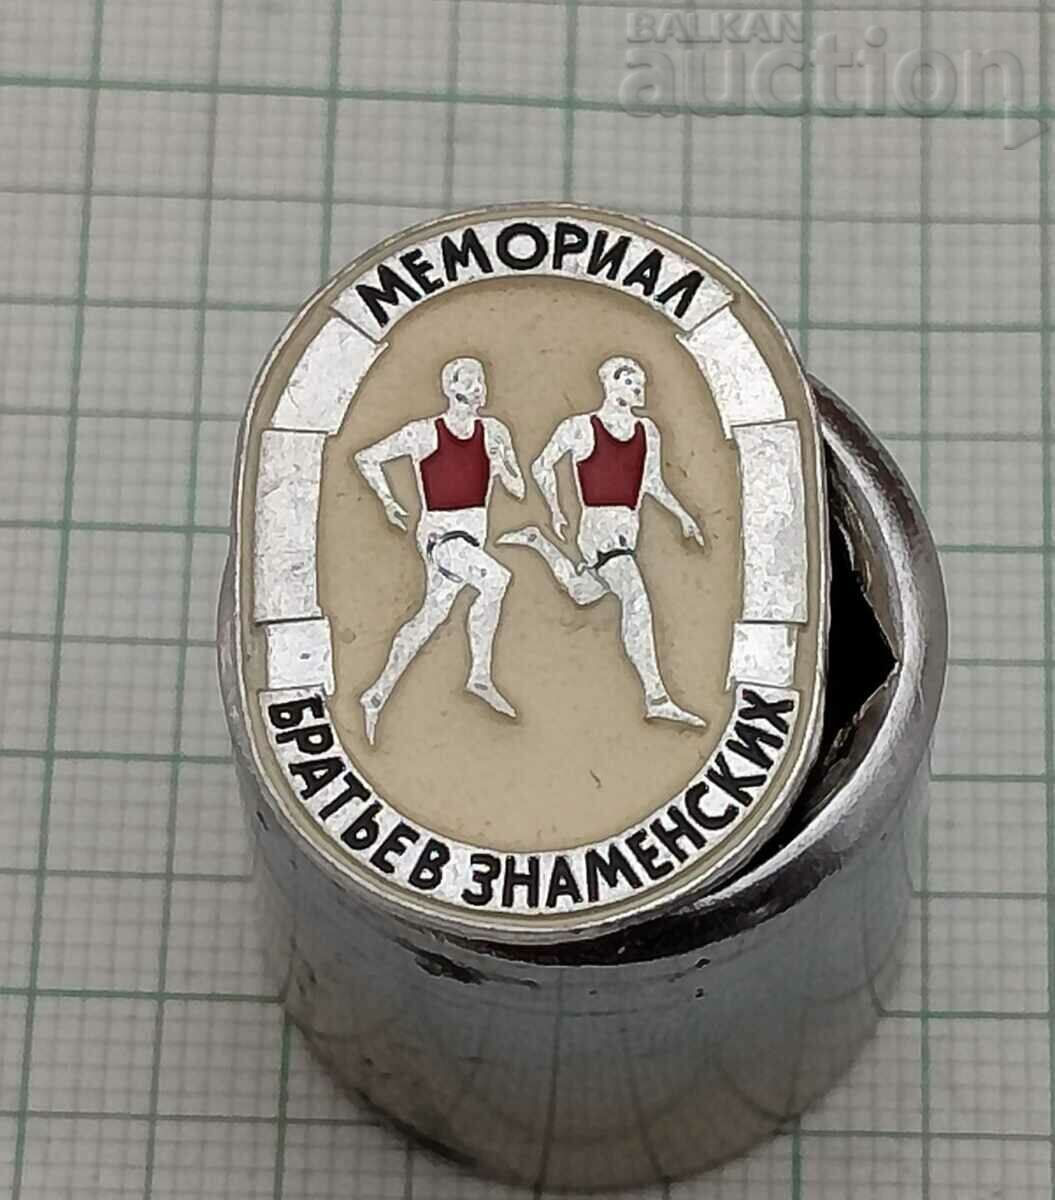 "ZNAMENSKY BROTHERS MEMORIAL" TOURNAMENT USSR BADGE